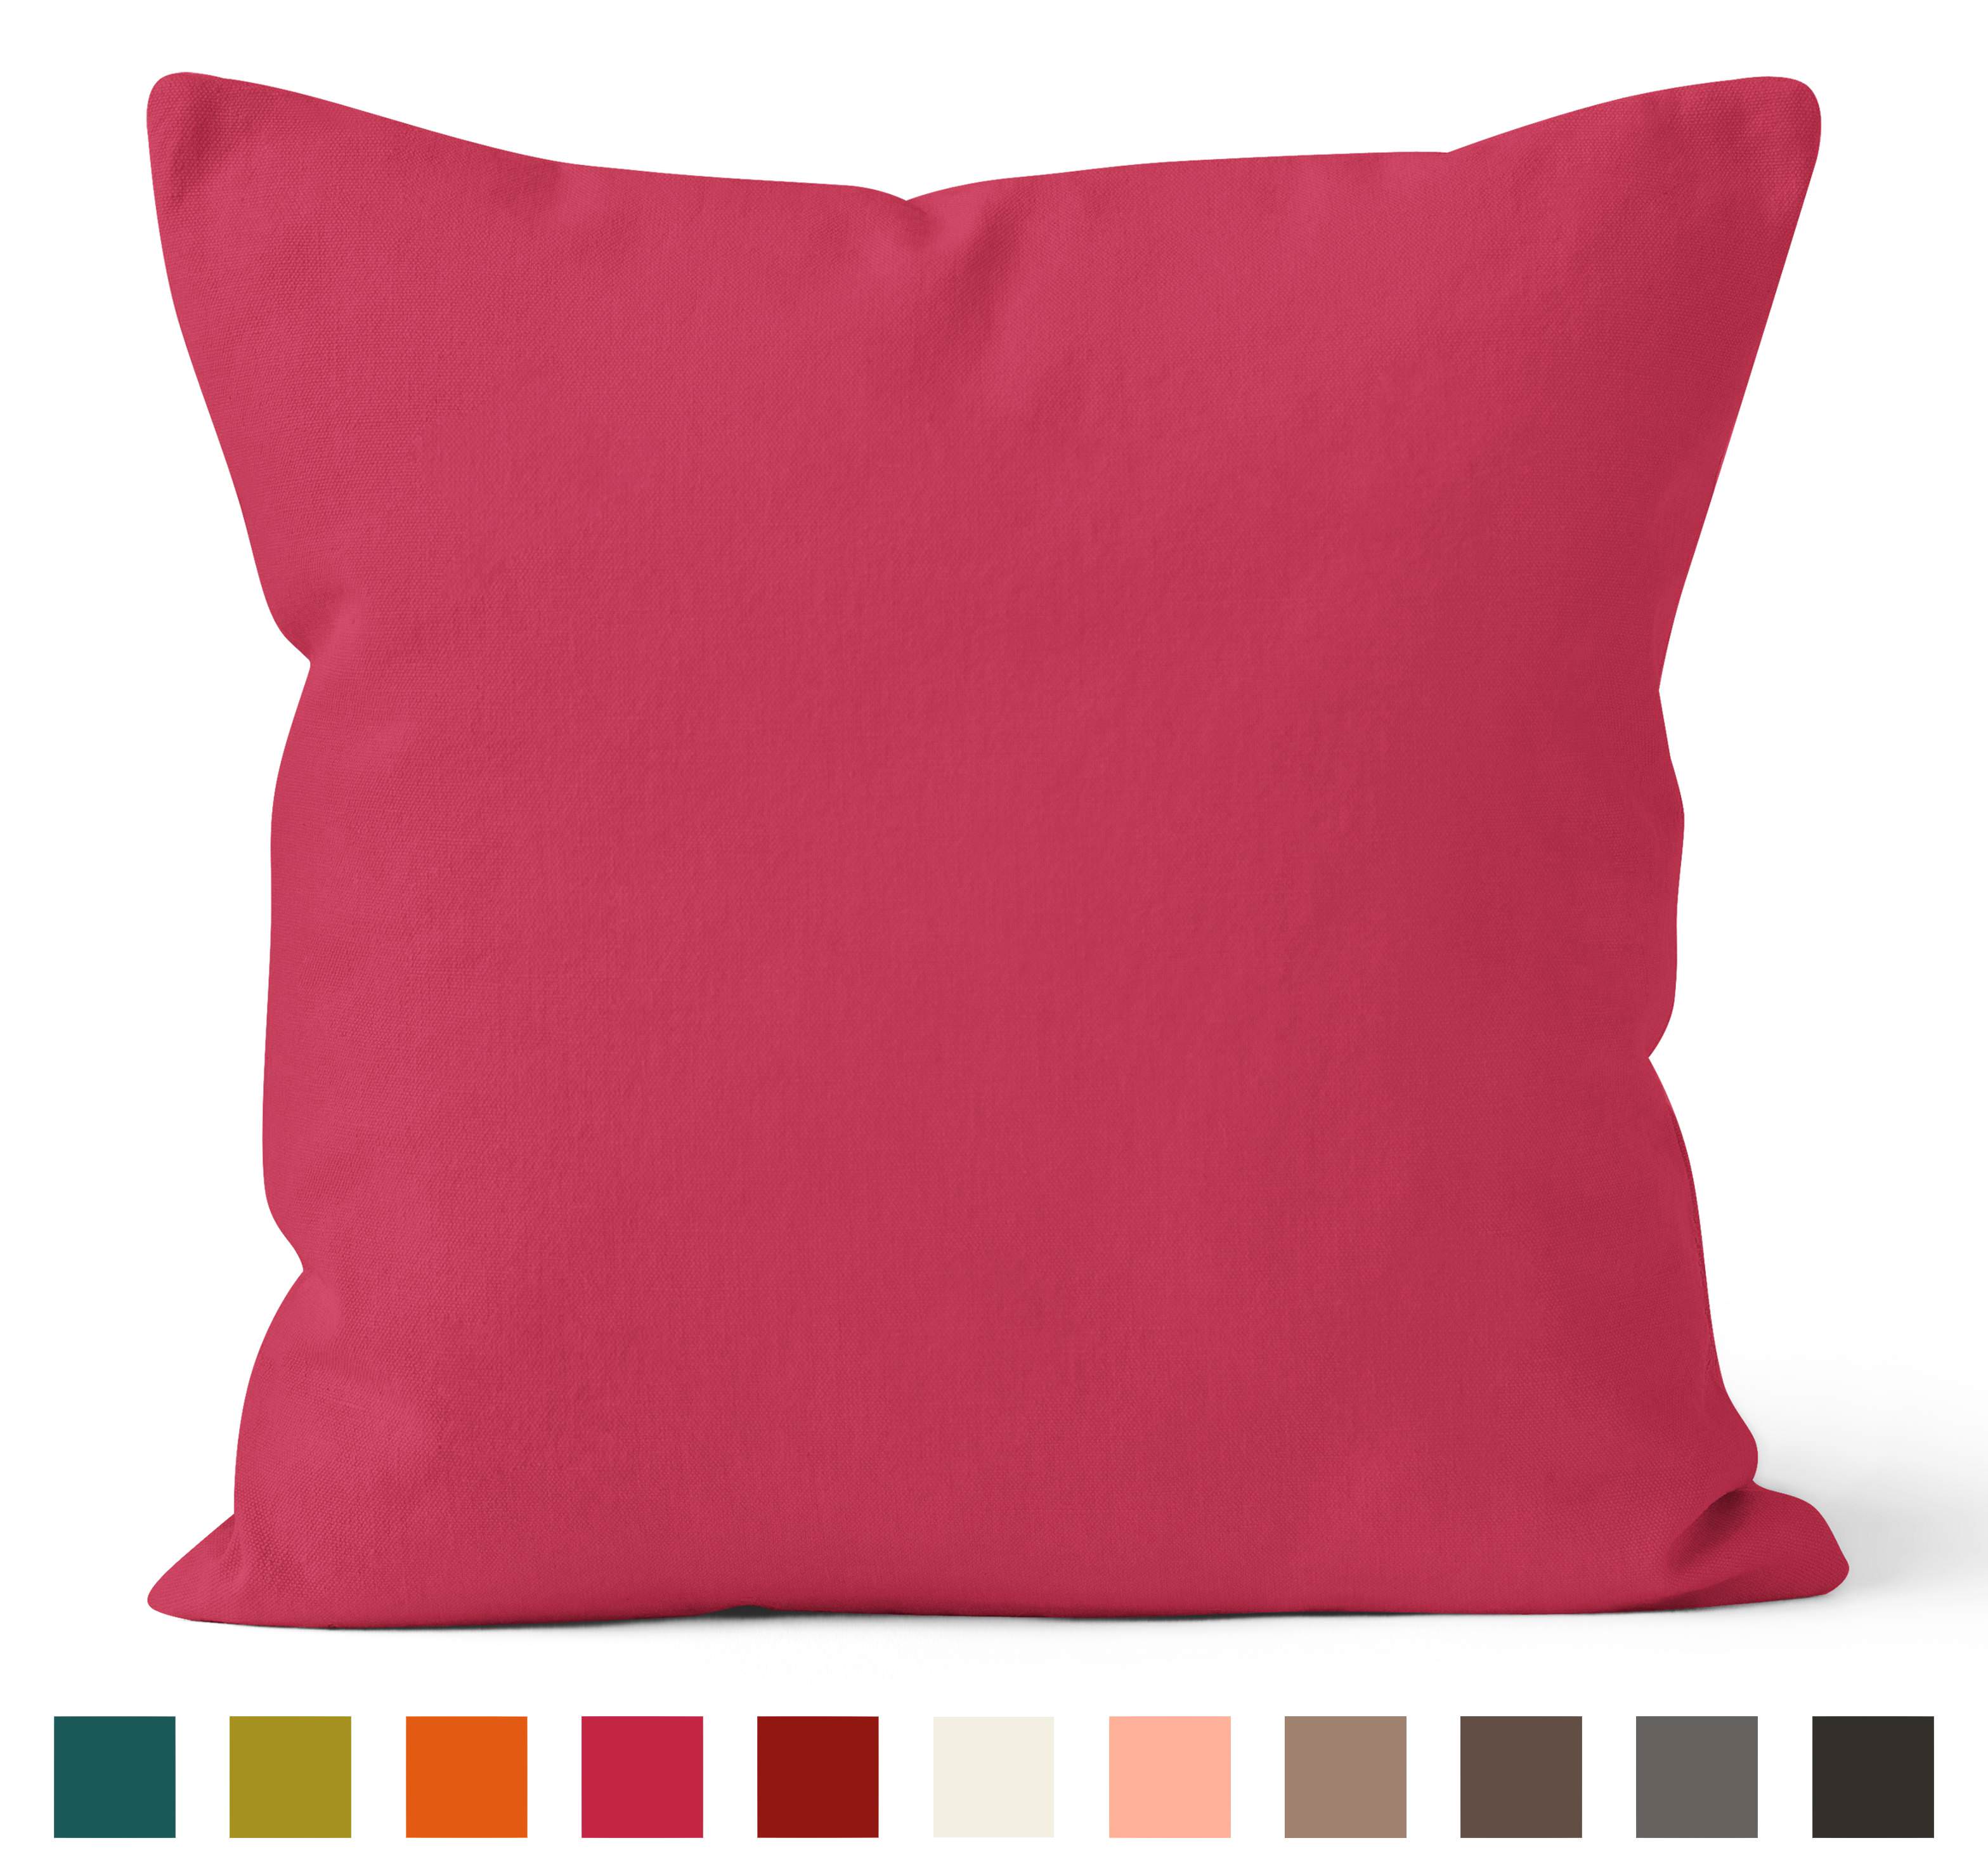 Encasa Homes Dyed Cotton Canvas Filled Cushion - 30x30 cm, Fuchsia Pink